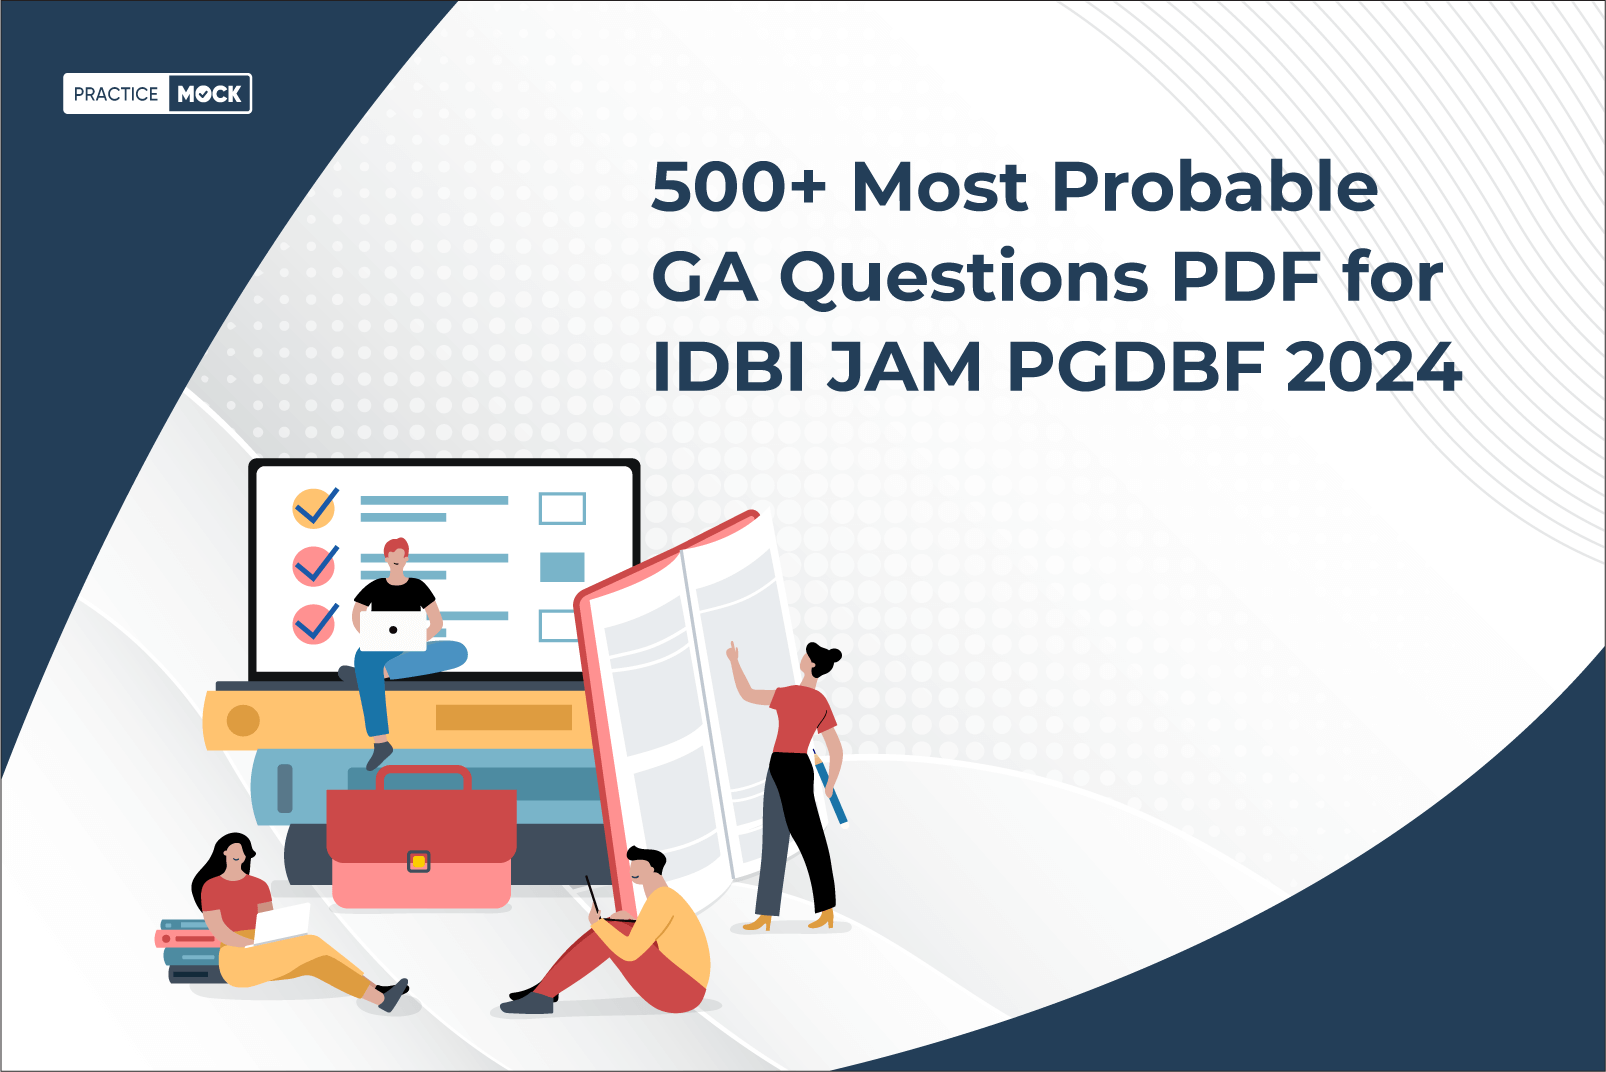 500 Most-Probable-GA-Questions-PDF-for-IDBI-JAM-PGDBF-2024